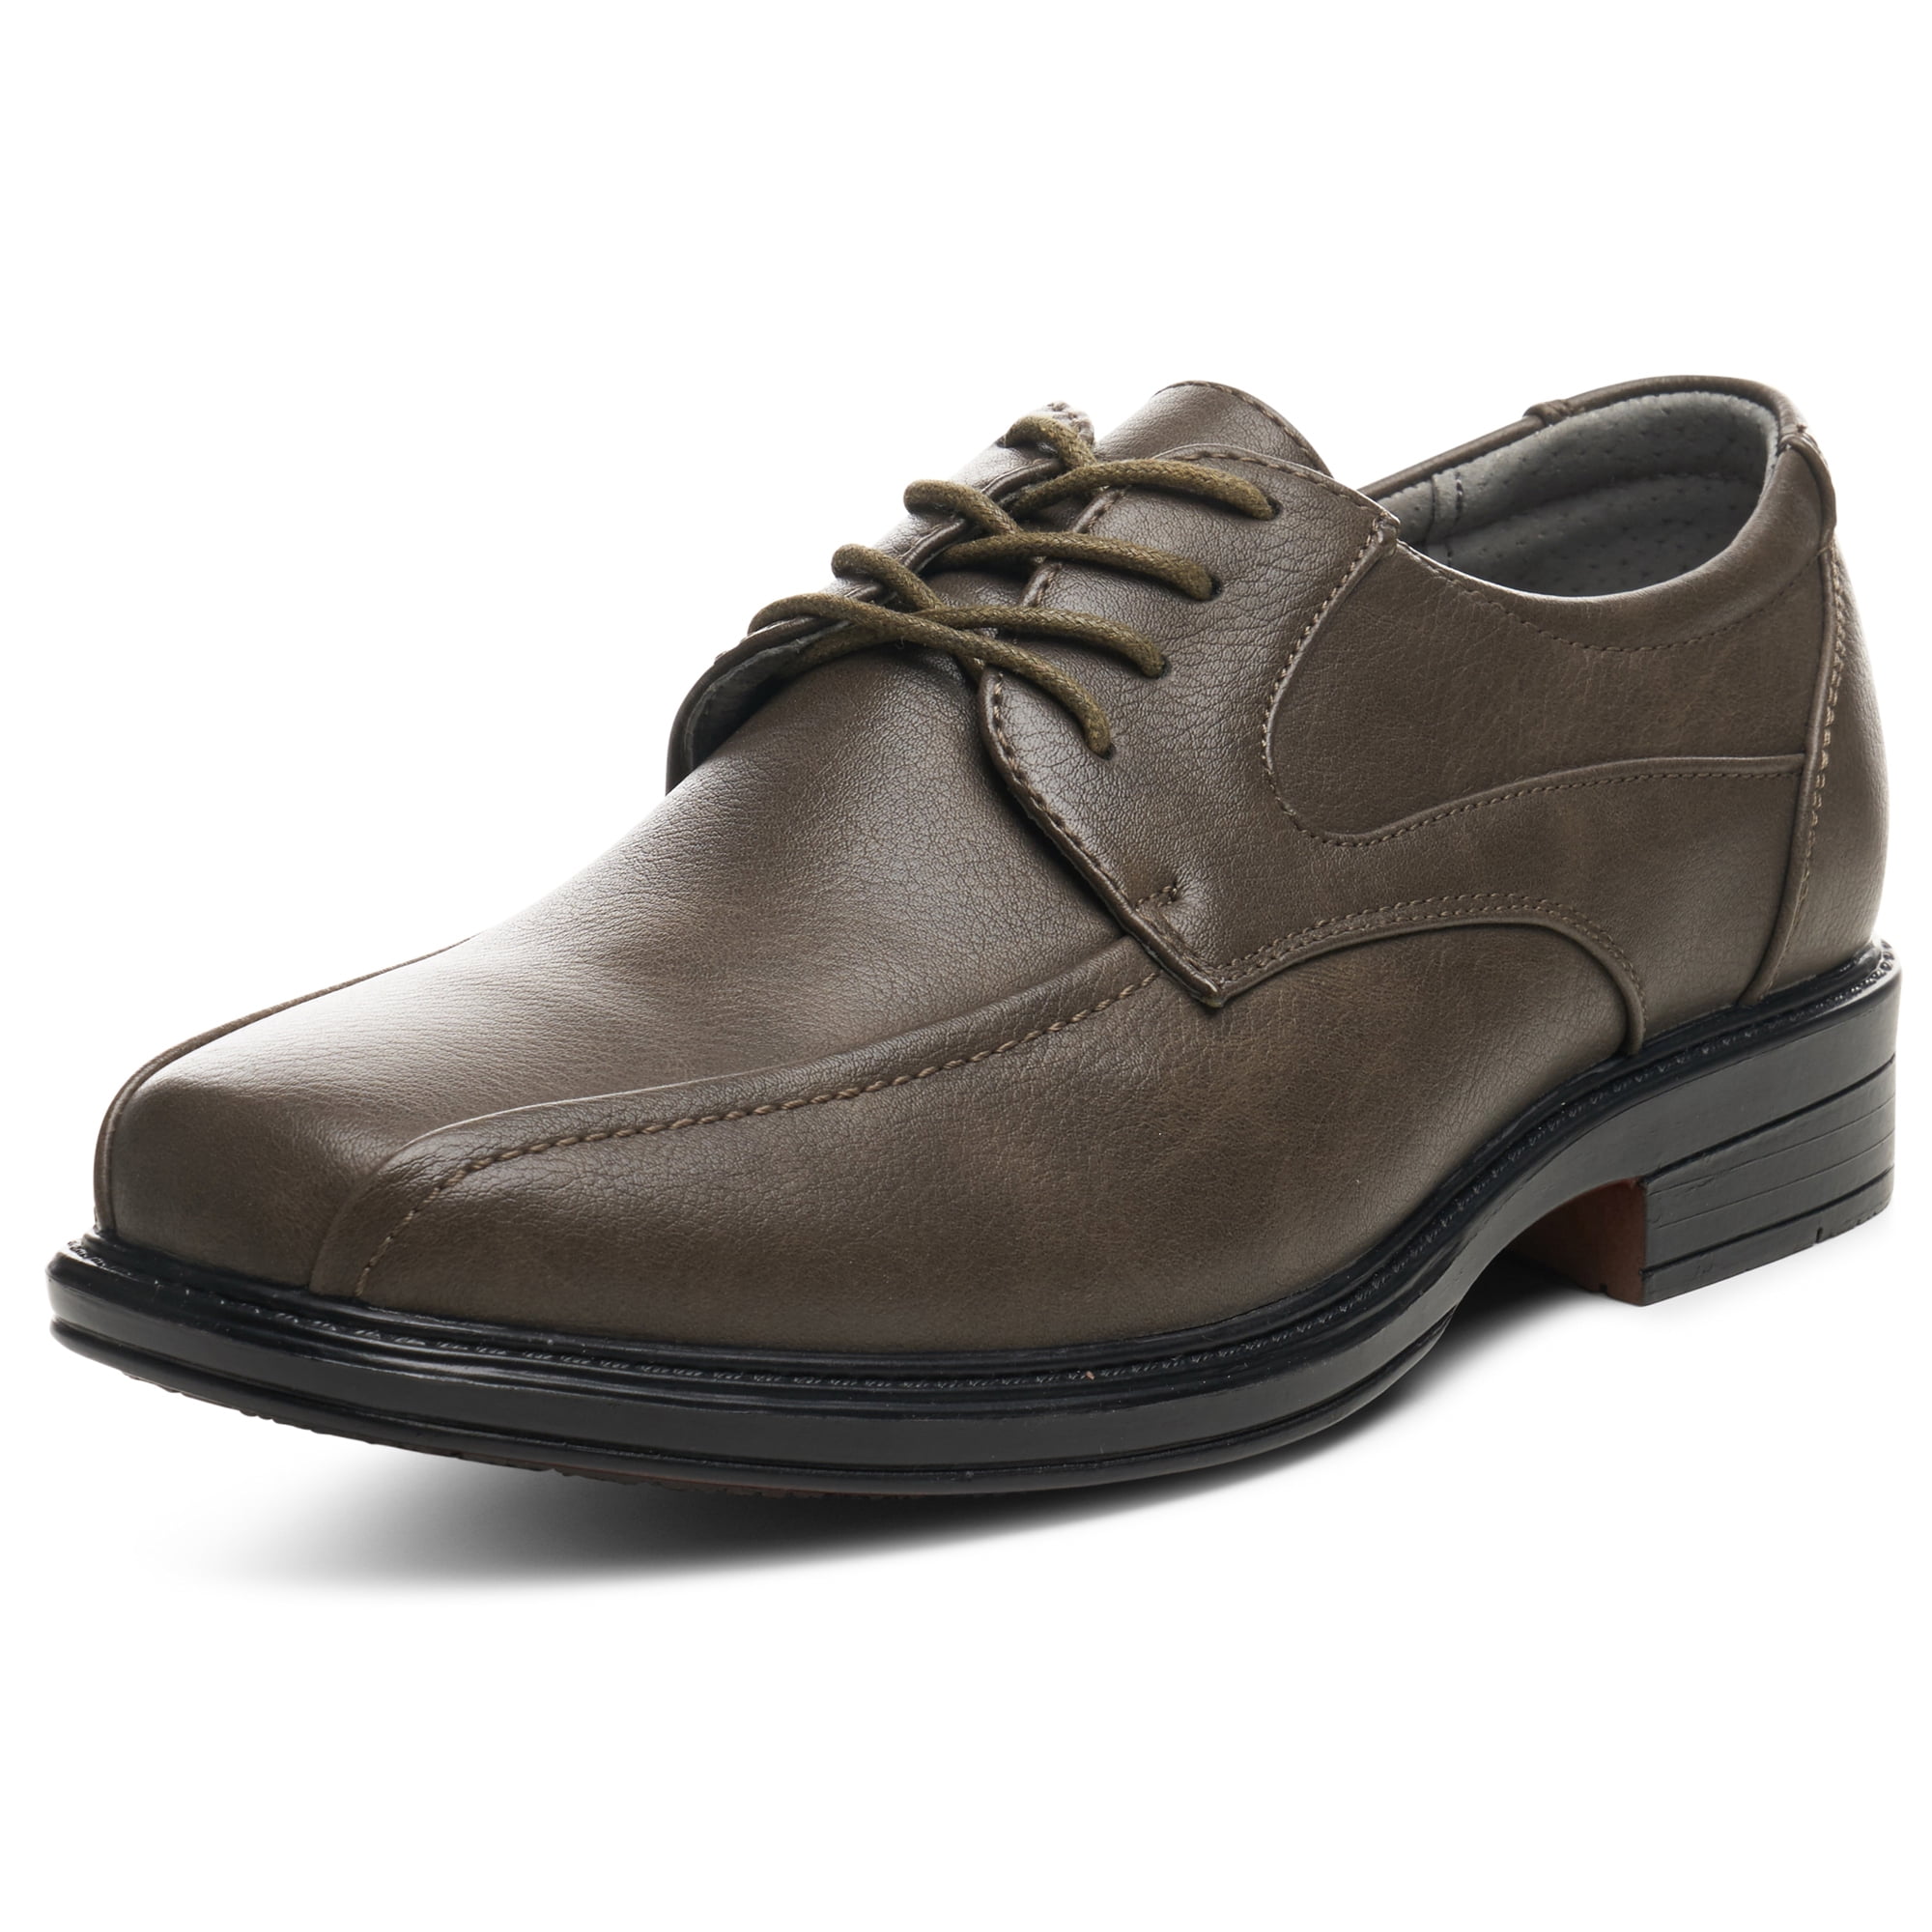 Sebago Brogue Formal Shoes Mens Premium Leather Lined Soft Casual Flats 